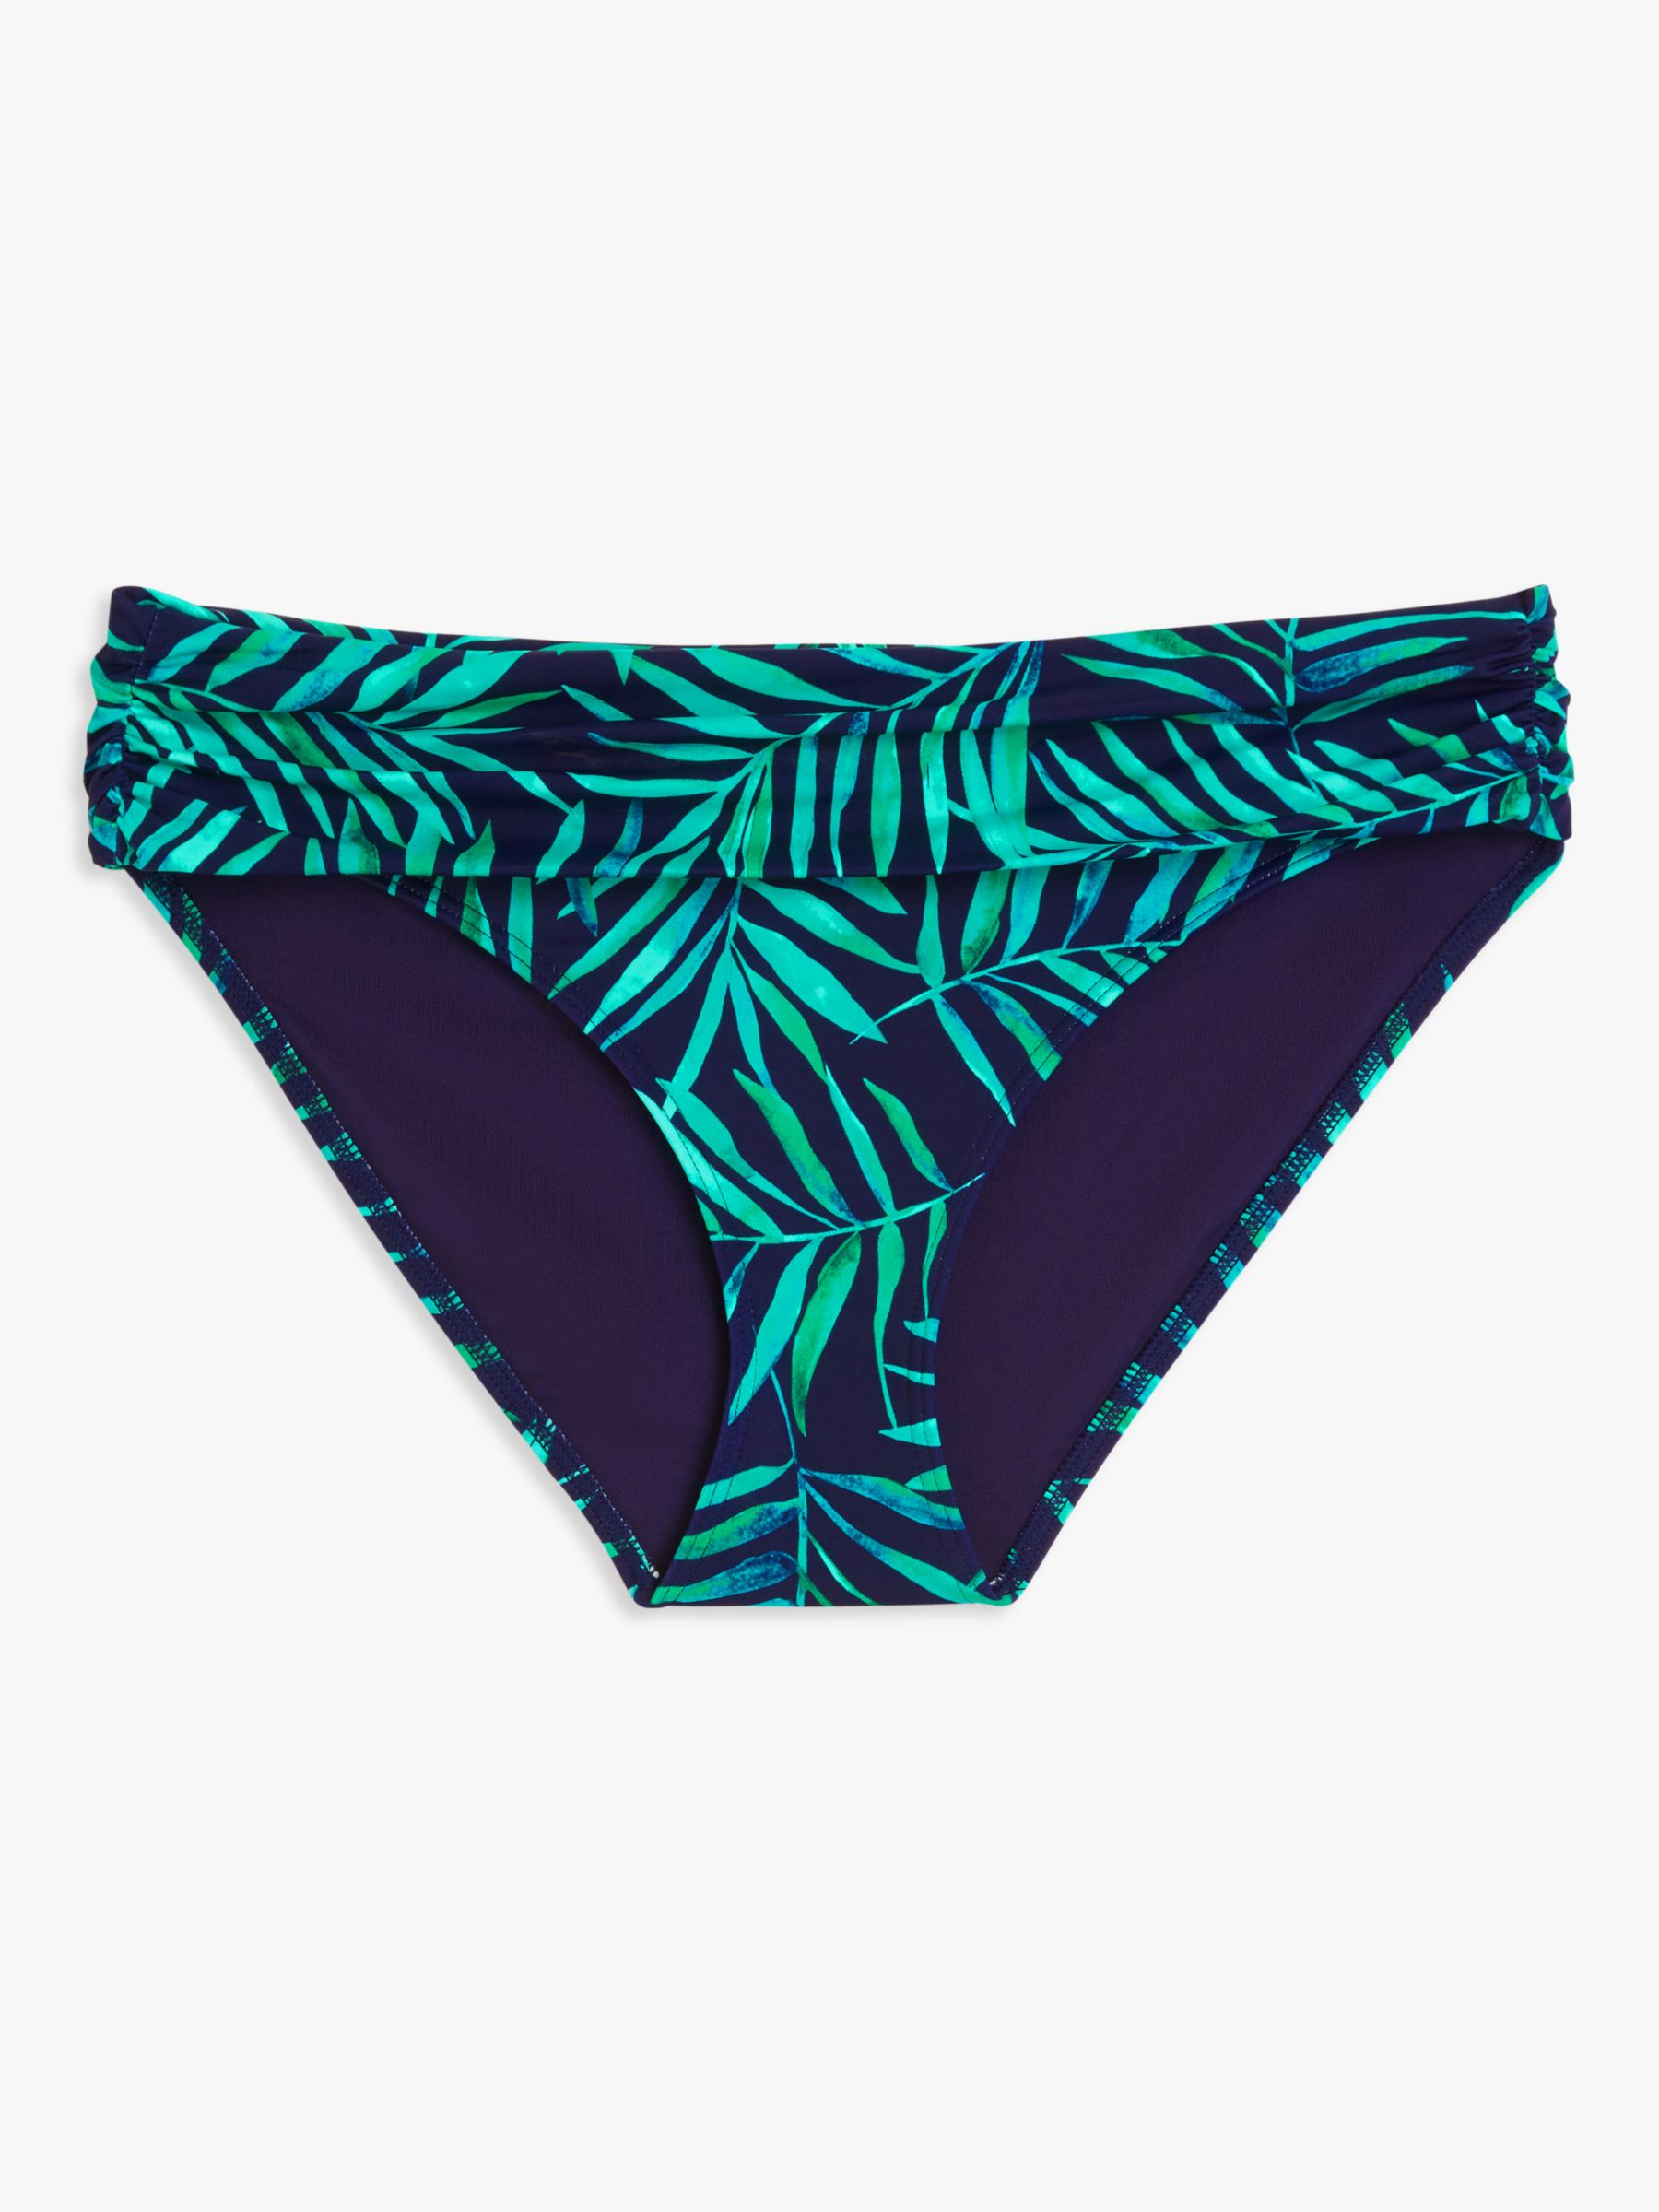 John Lewis Nassau Leaf Print Bikini Bottoms, Navy/Green, 8